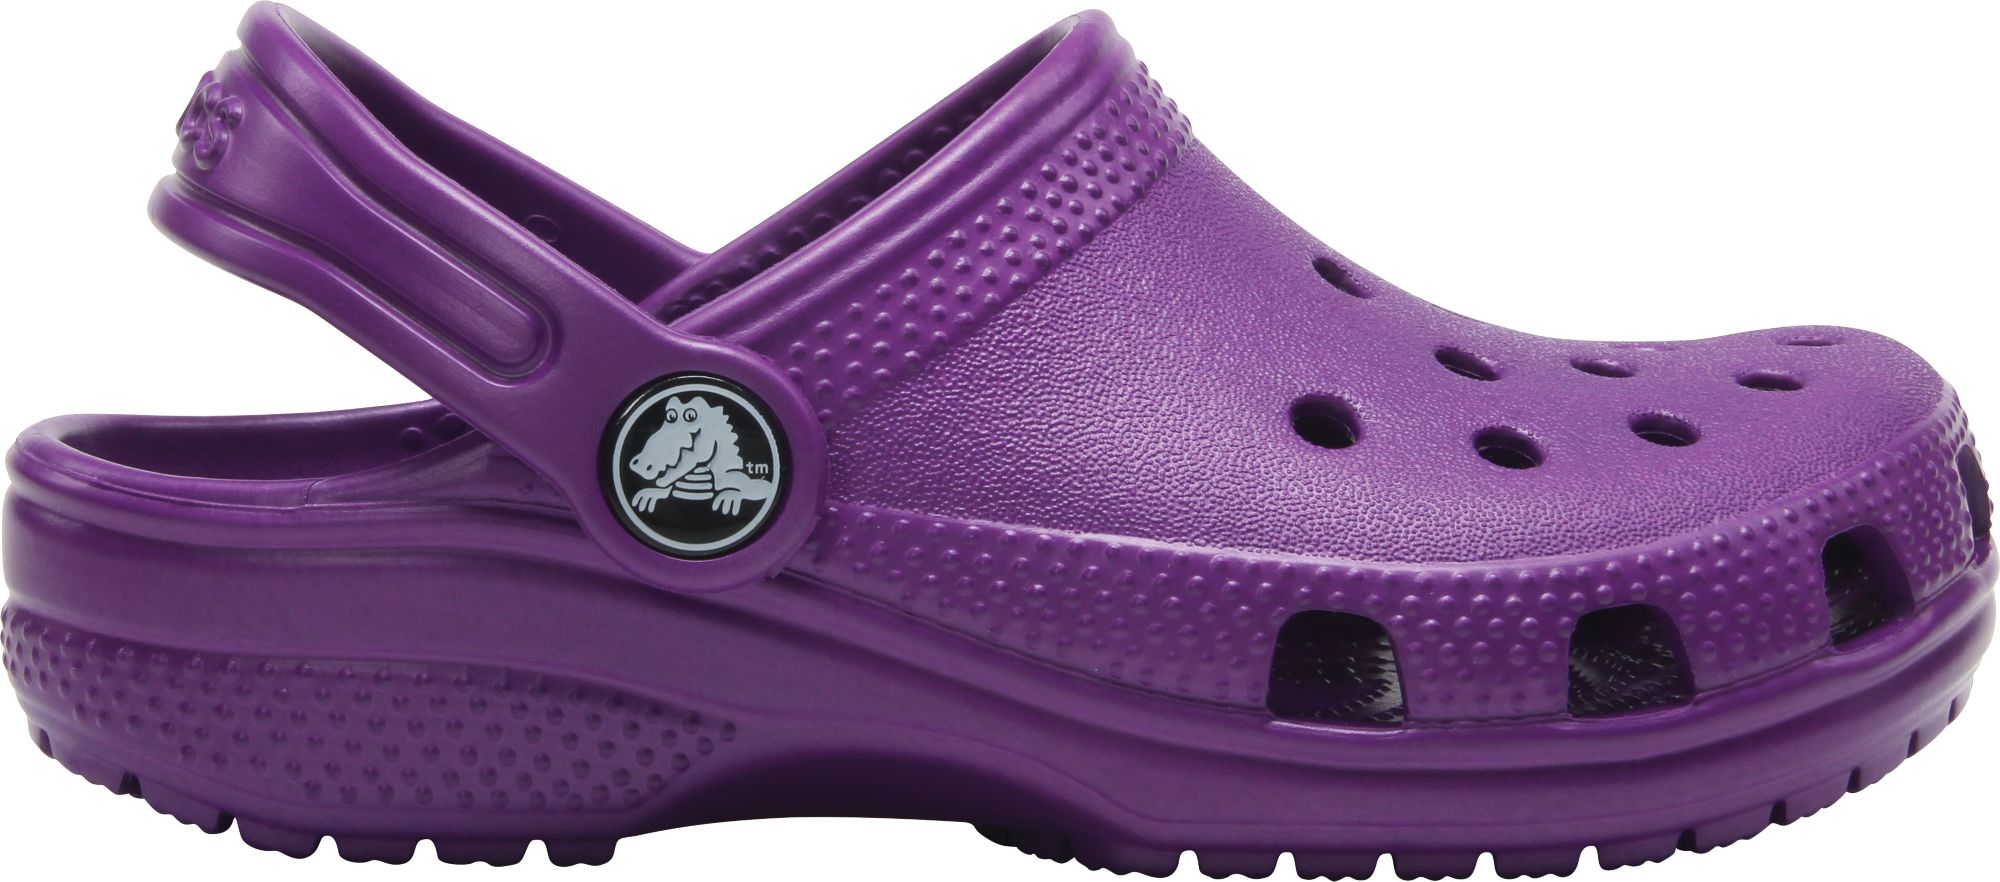 mens purple crocs